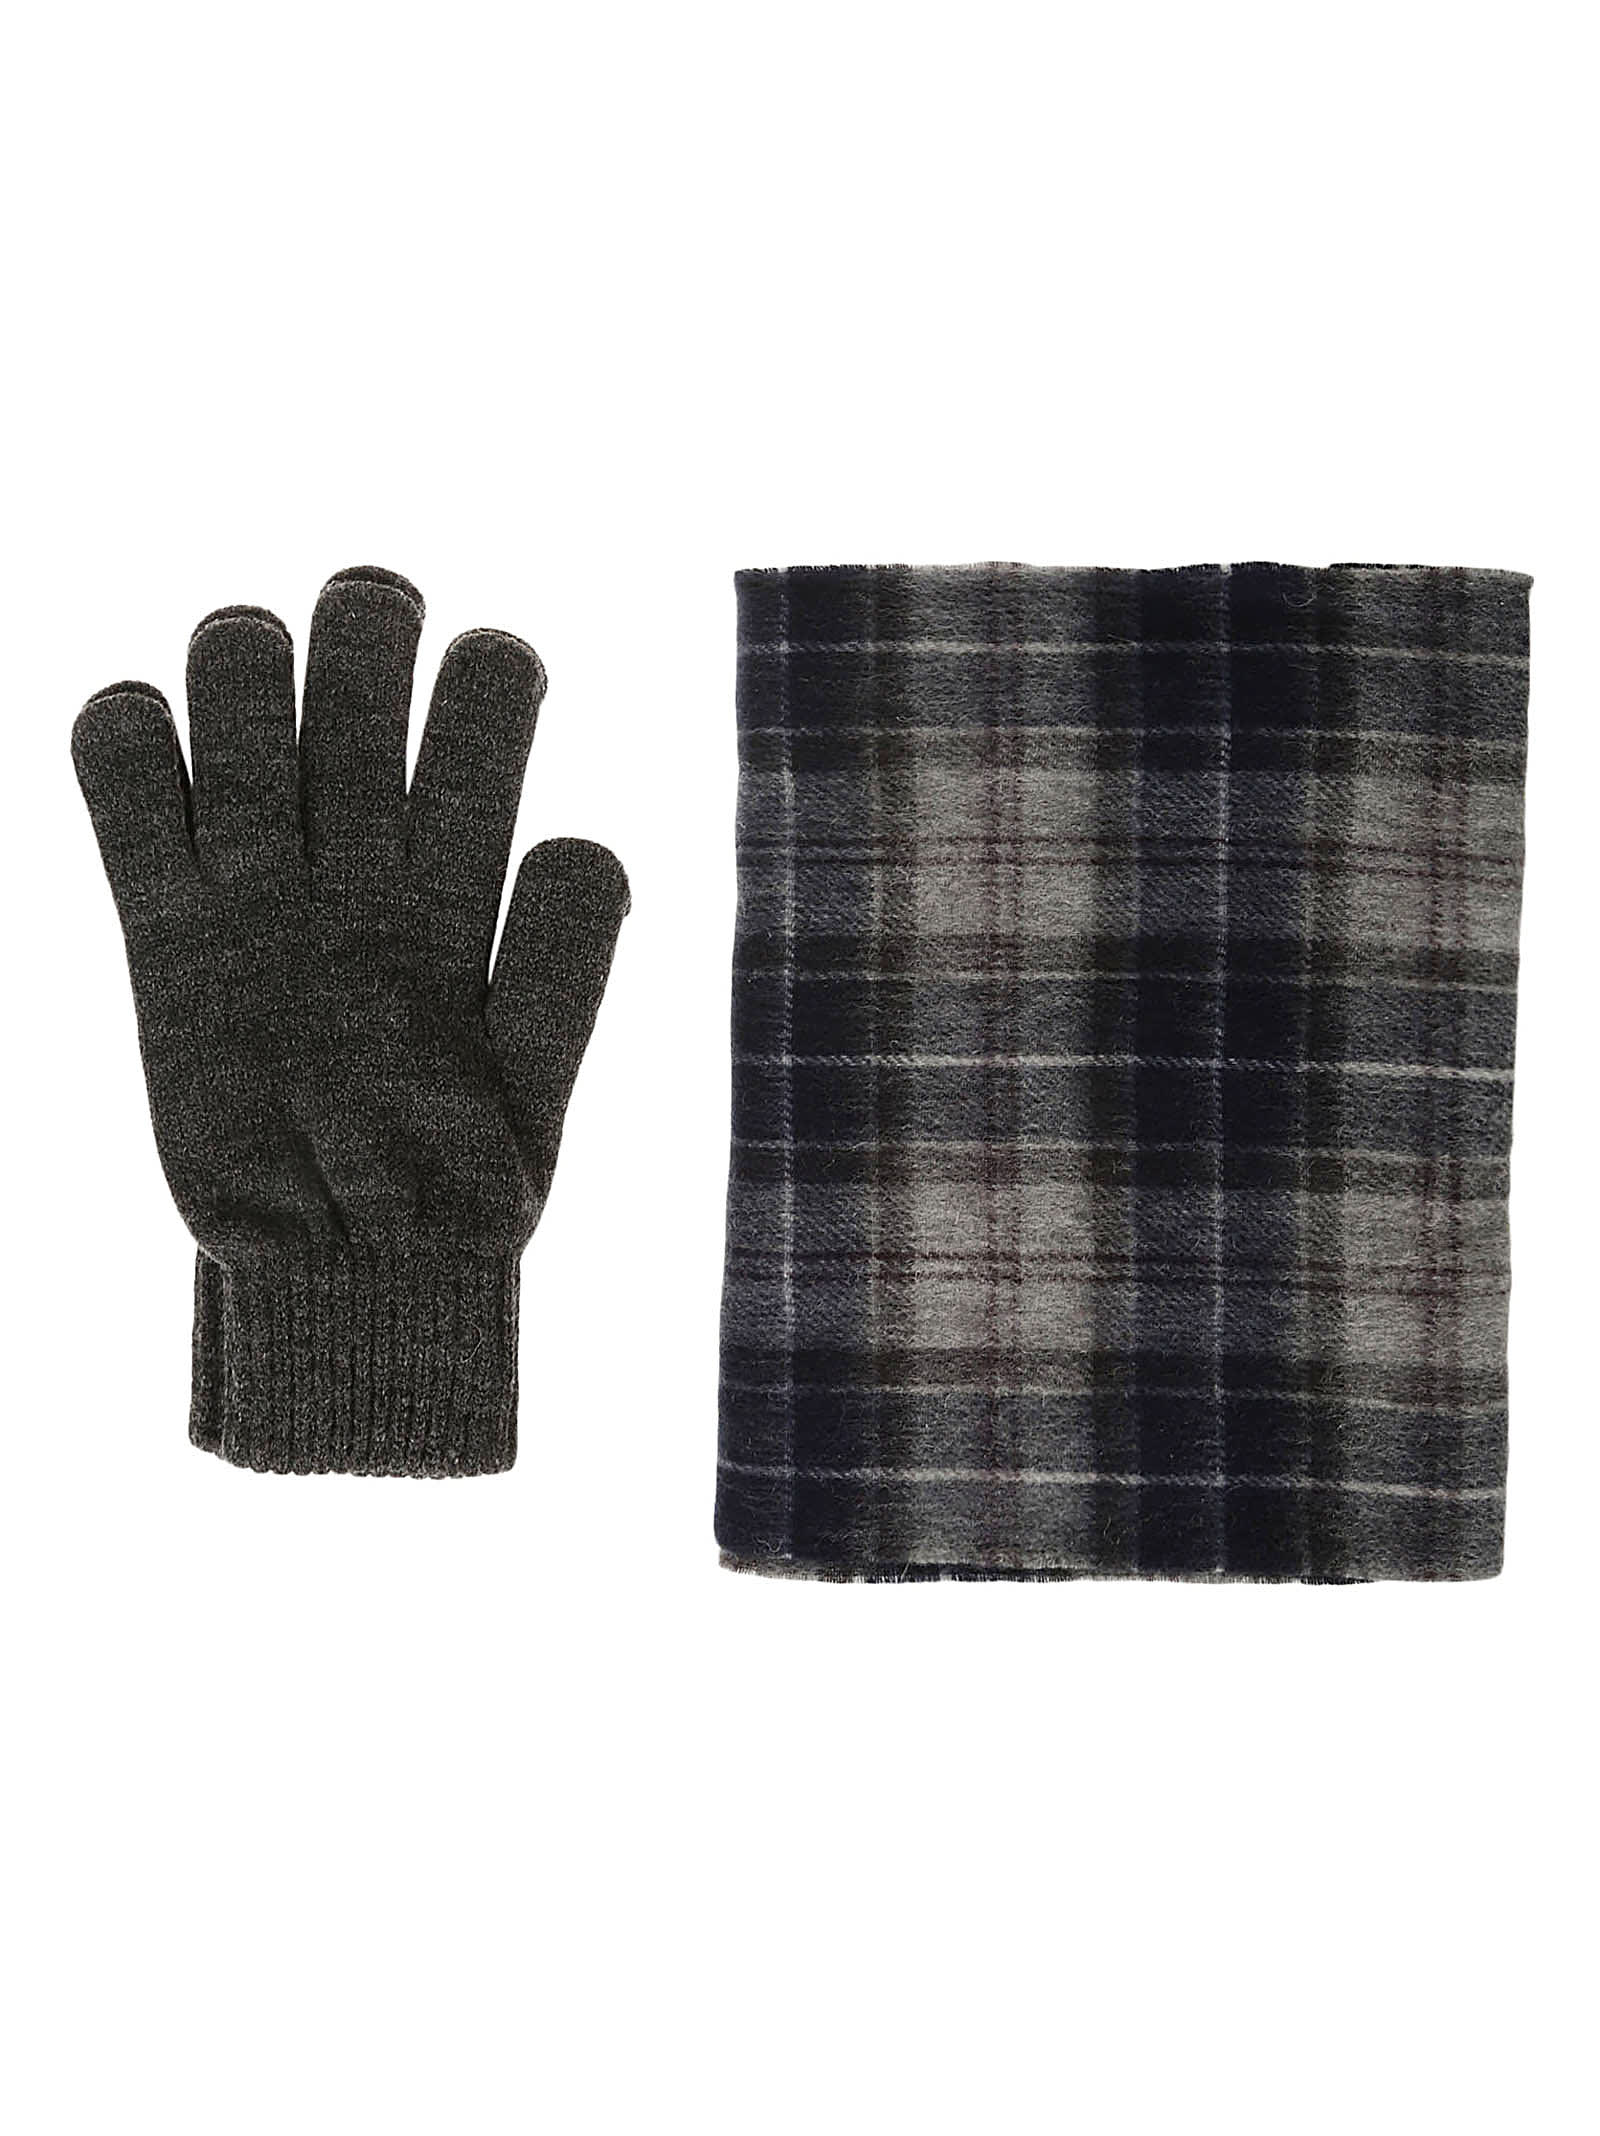 Shop Barbour Tartan Scarf Glove Gift Set In Black Slate Tartan